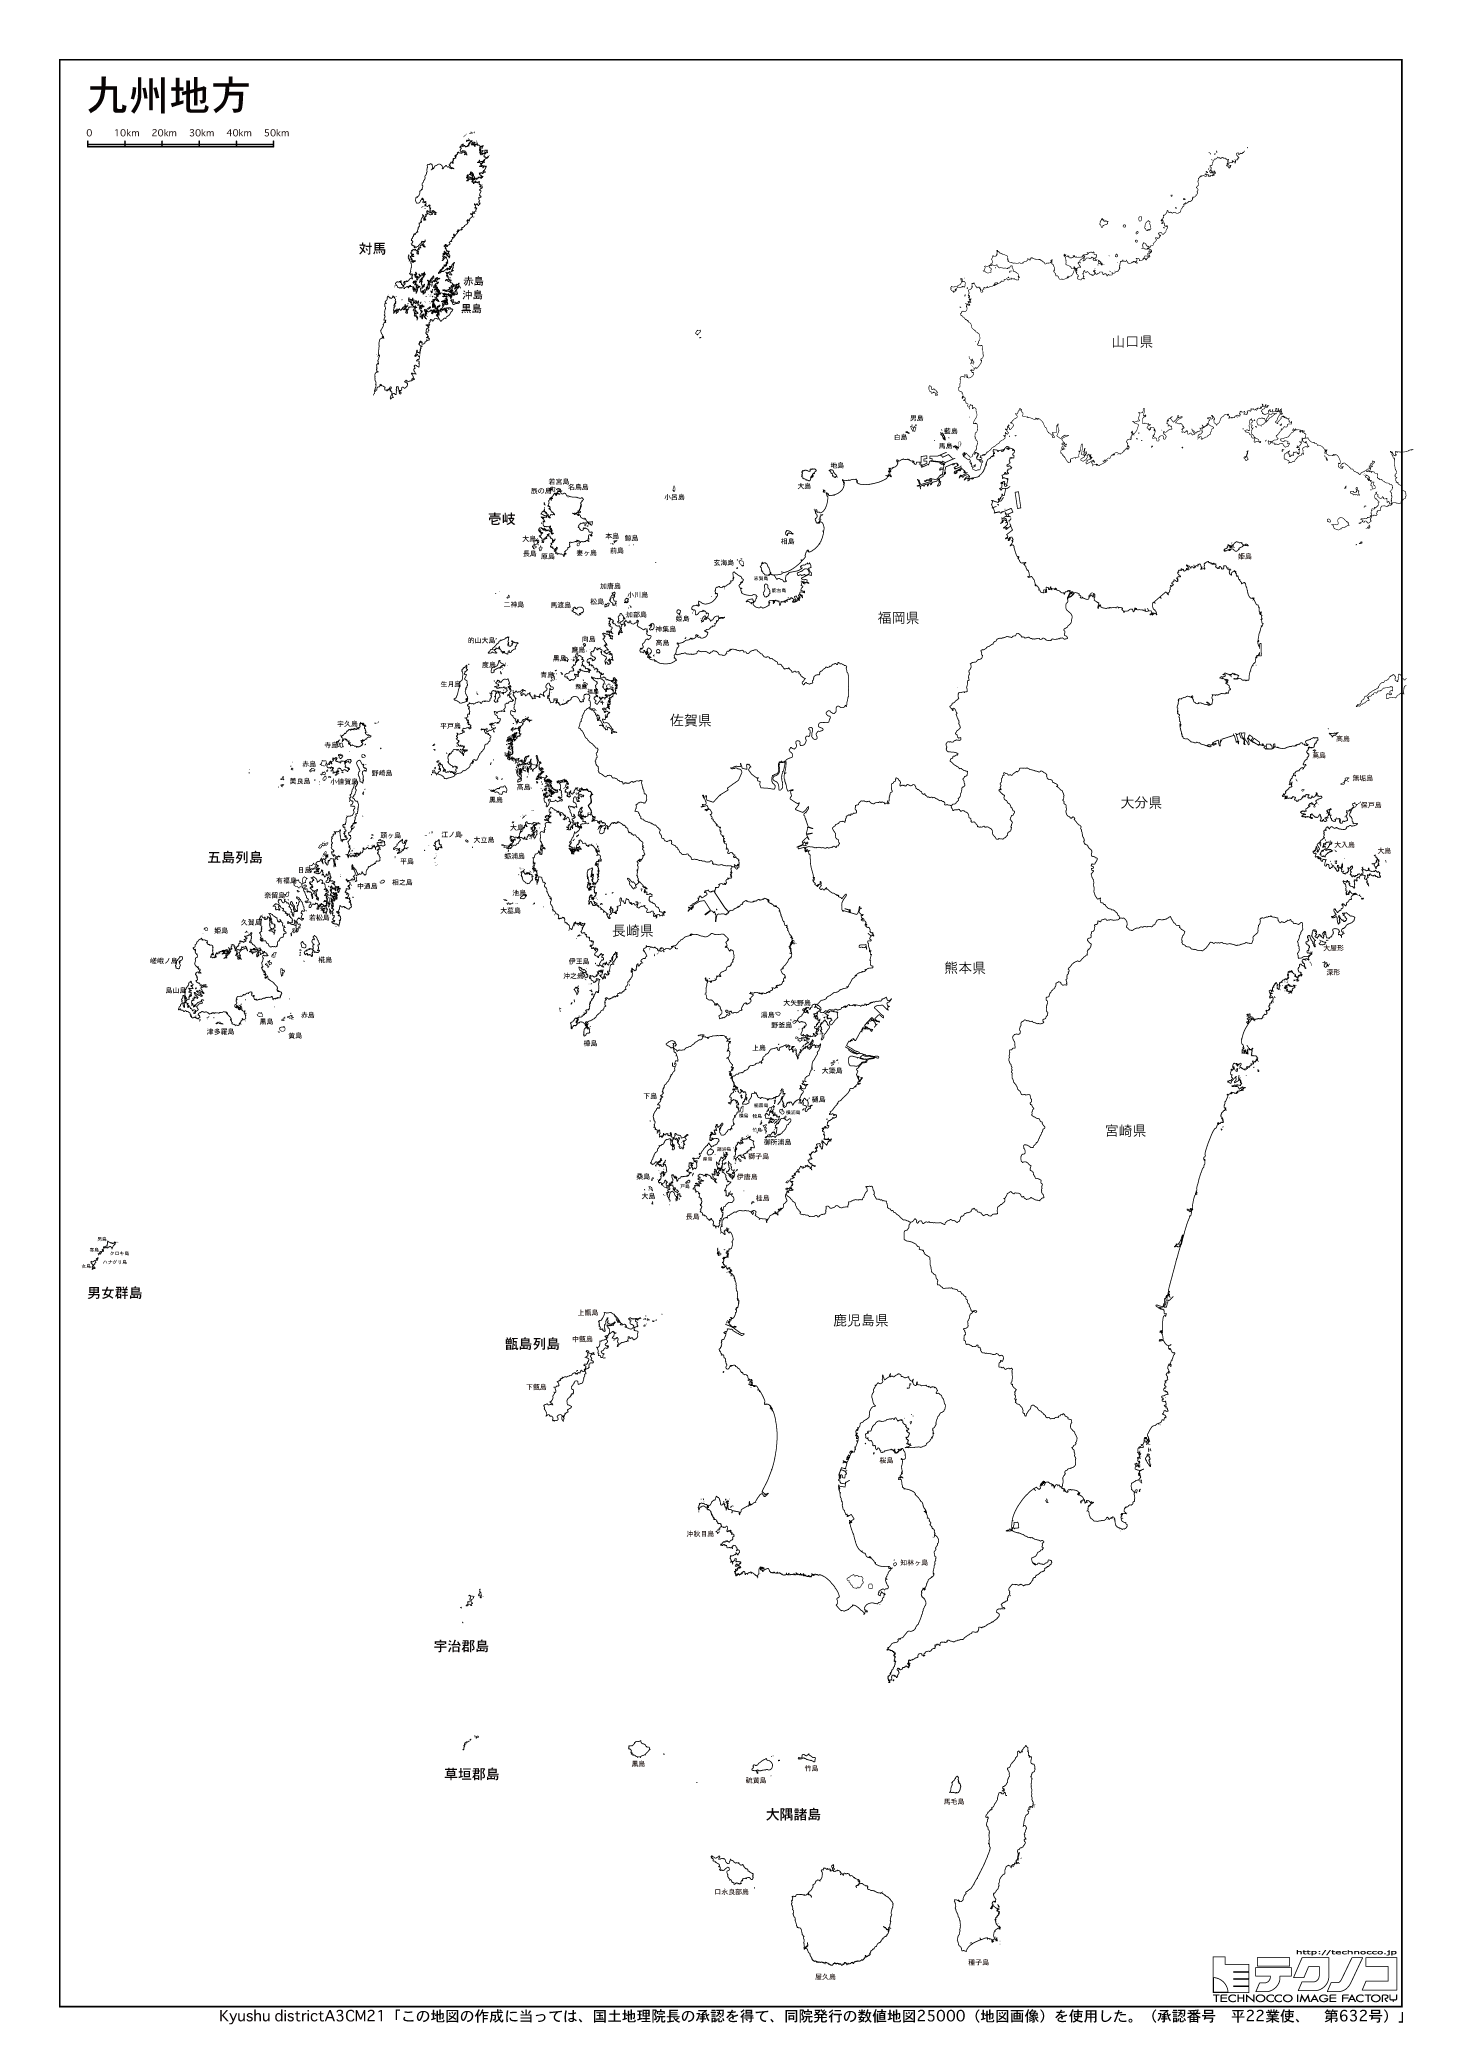 Kasword 九州地図 わかりやすい